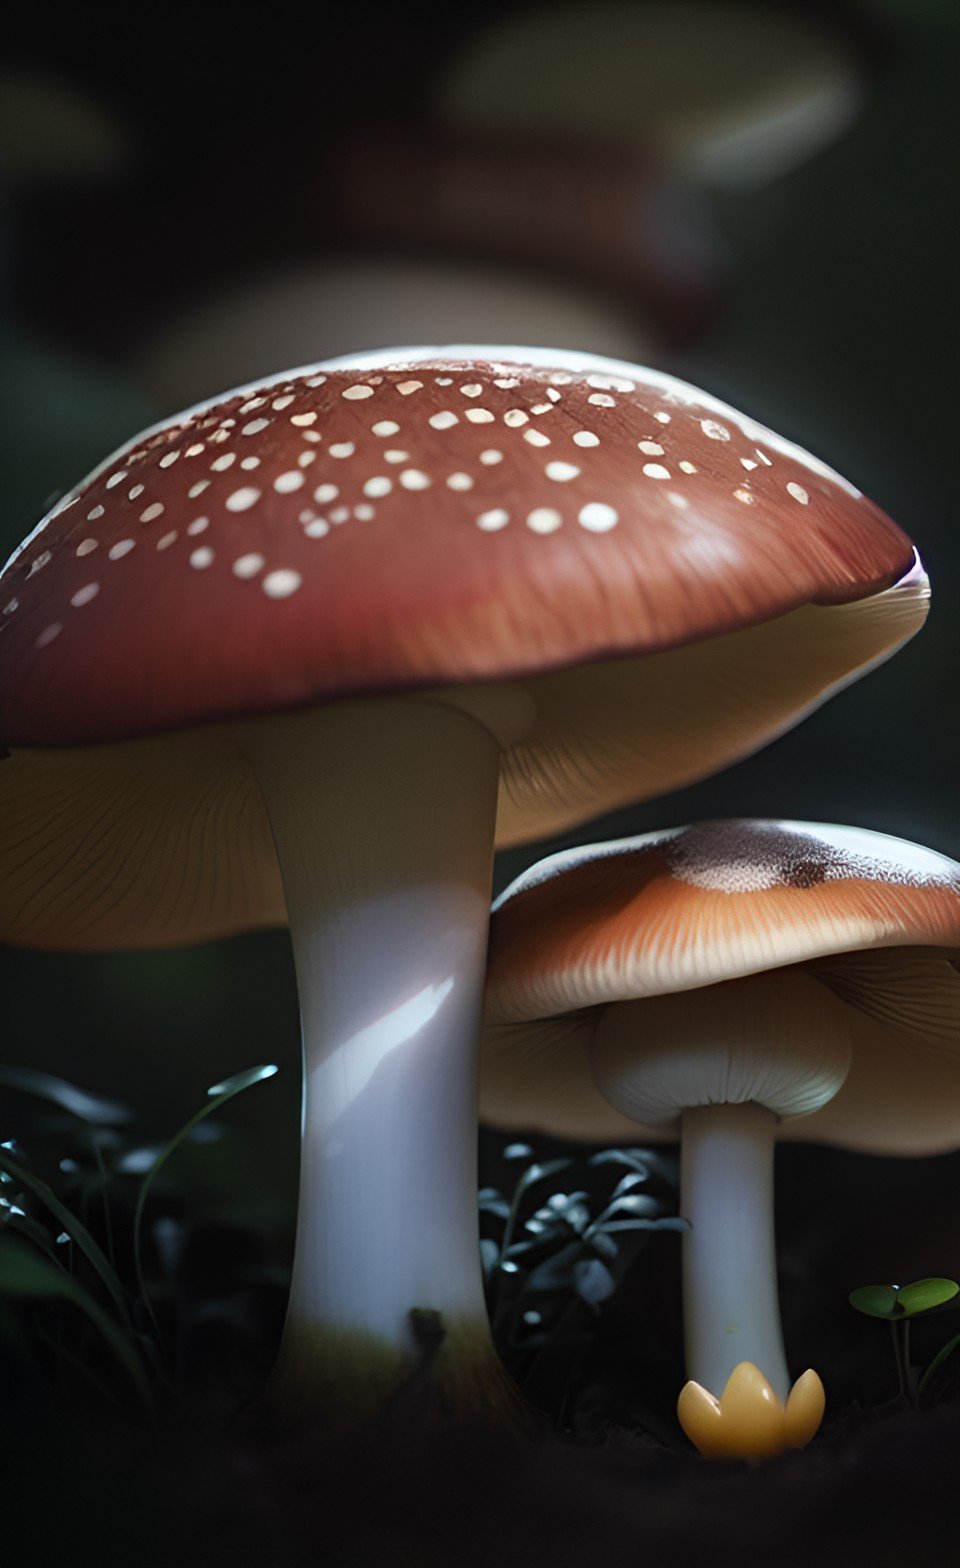 Mushroom- The treasure thrown to the ground